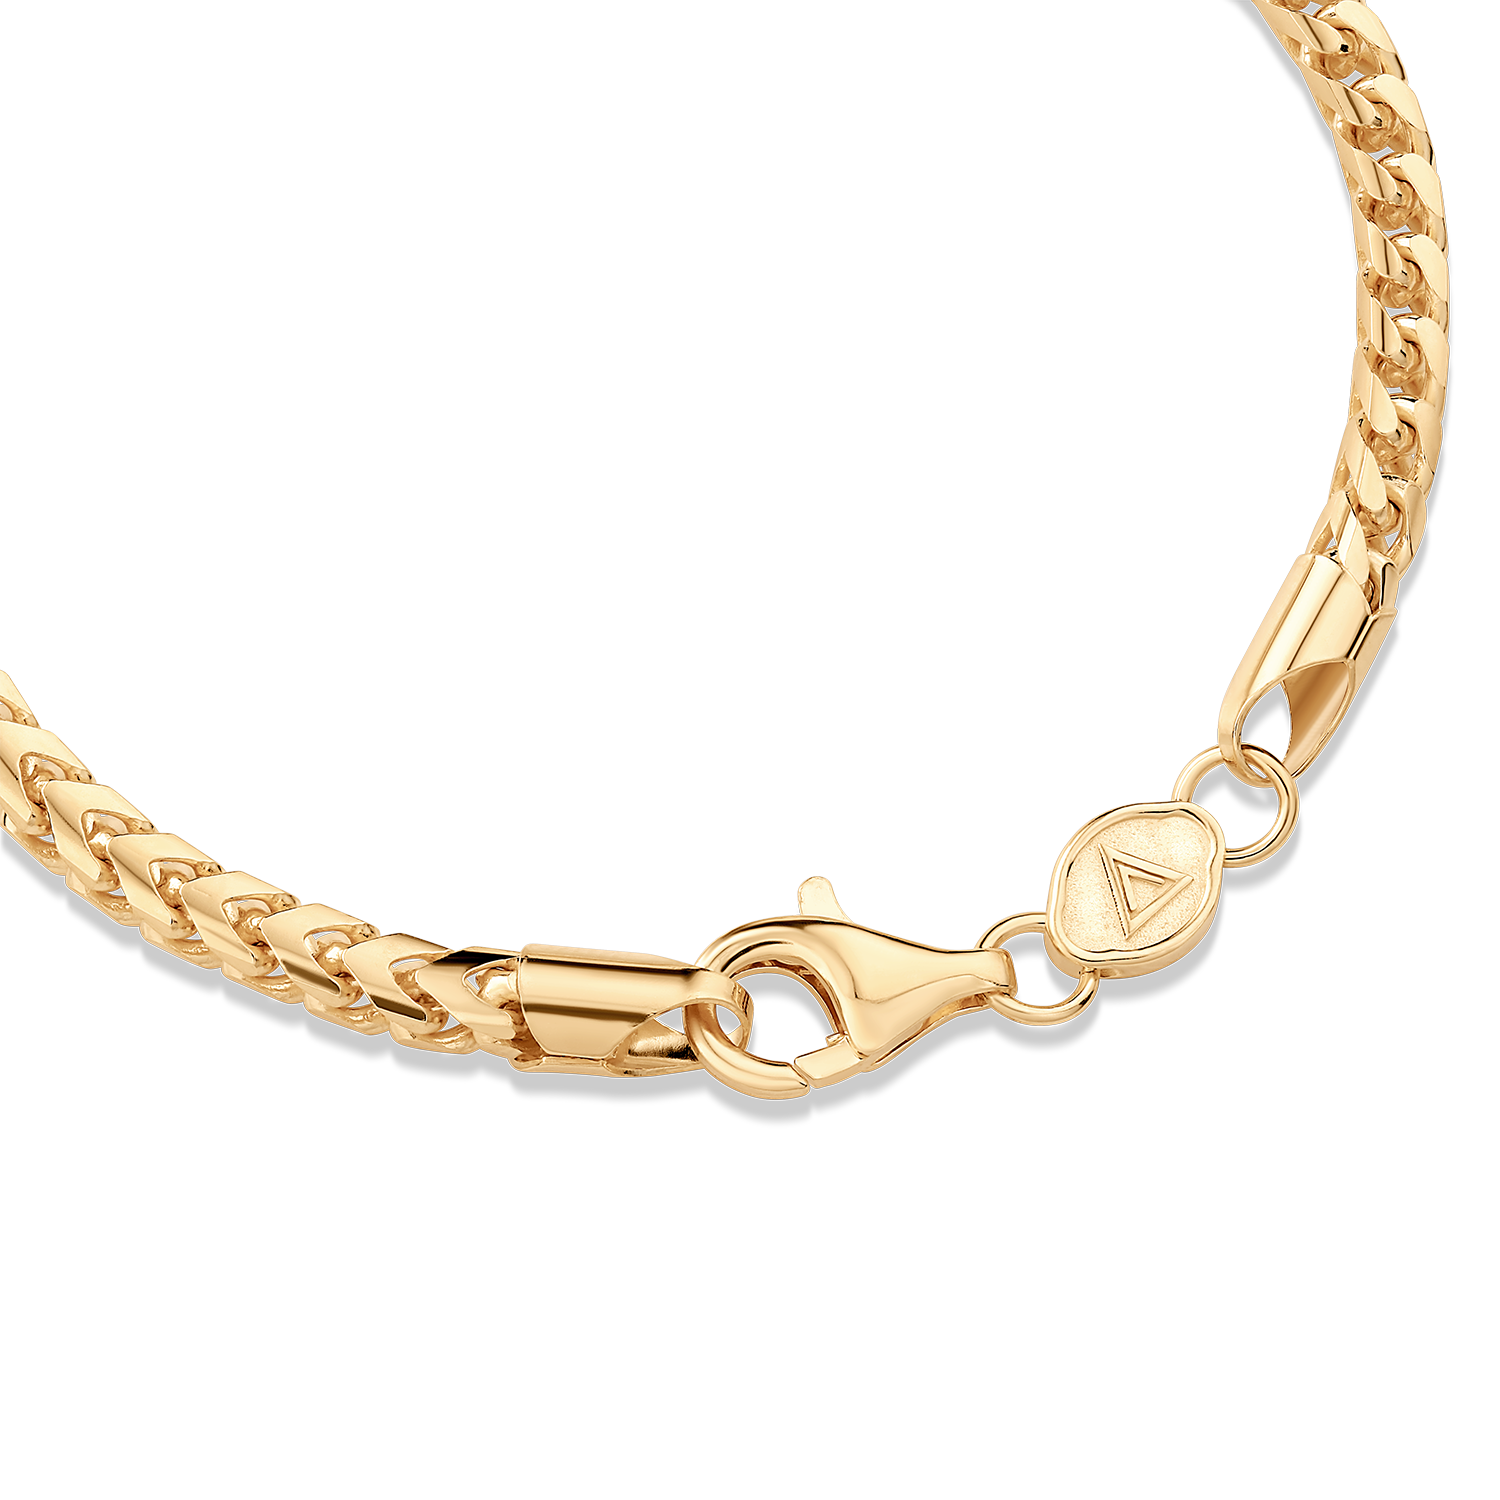 3mm Gold Bead Bracelet — Clementine Designs